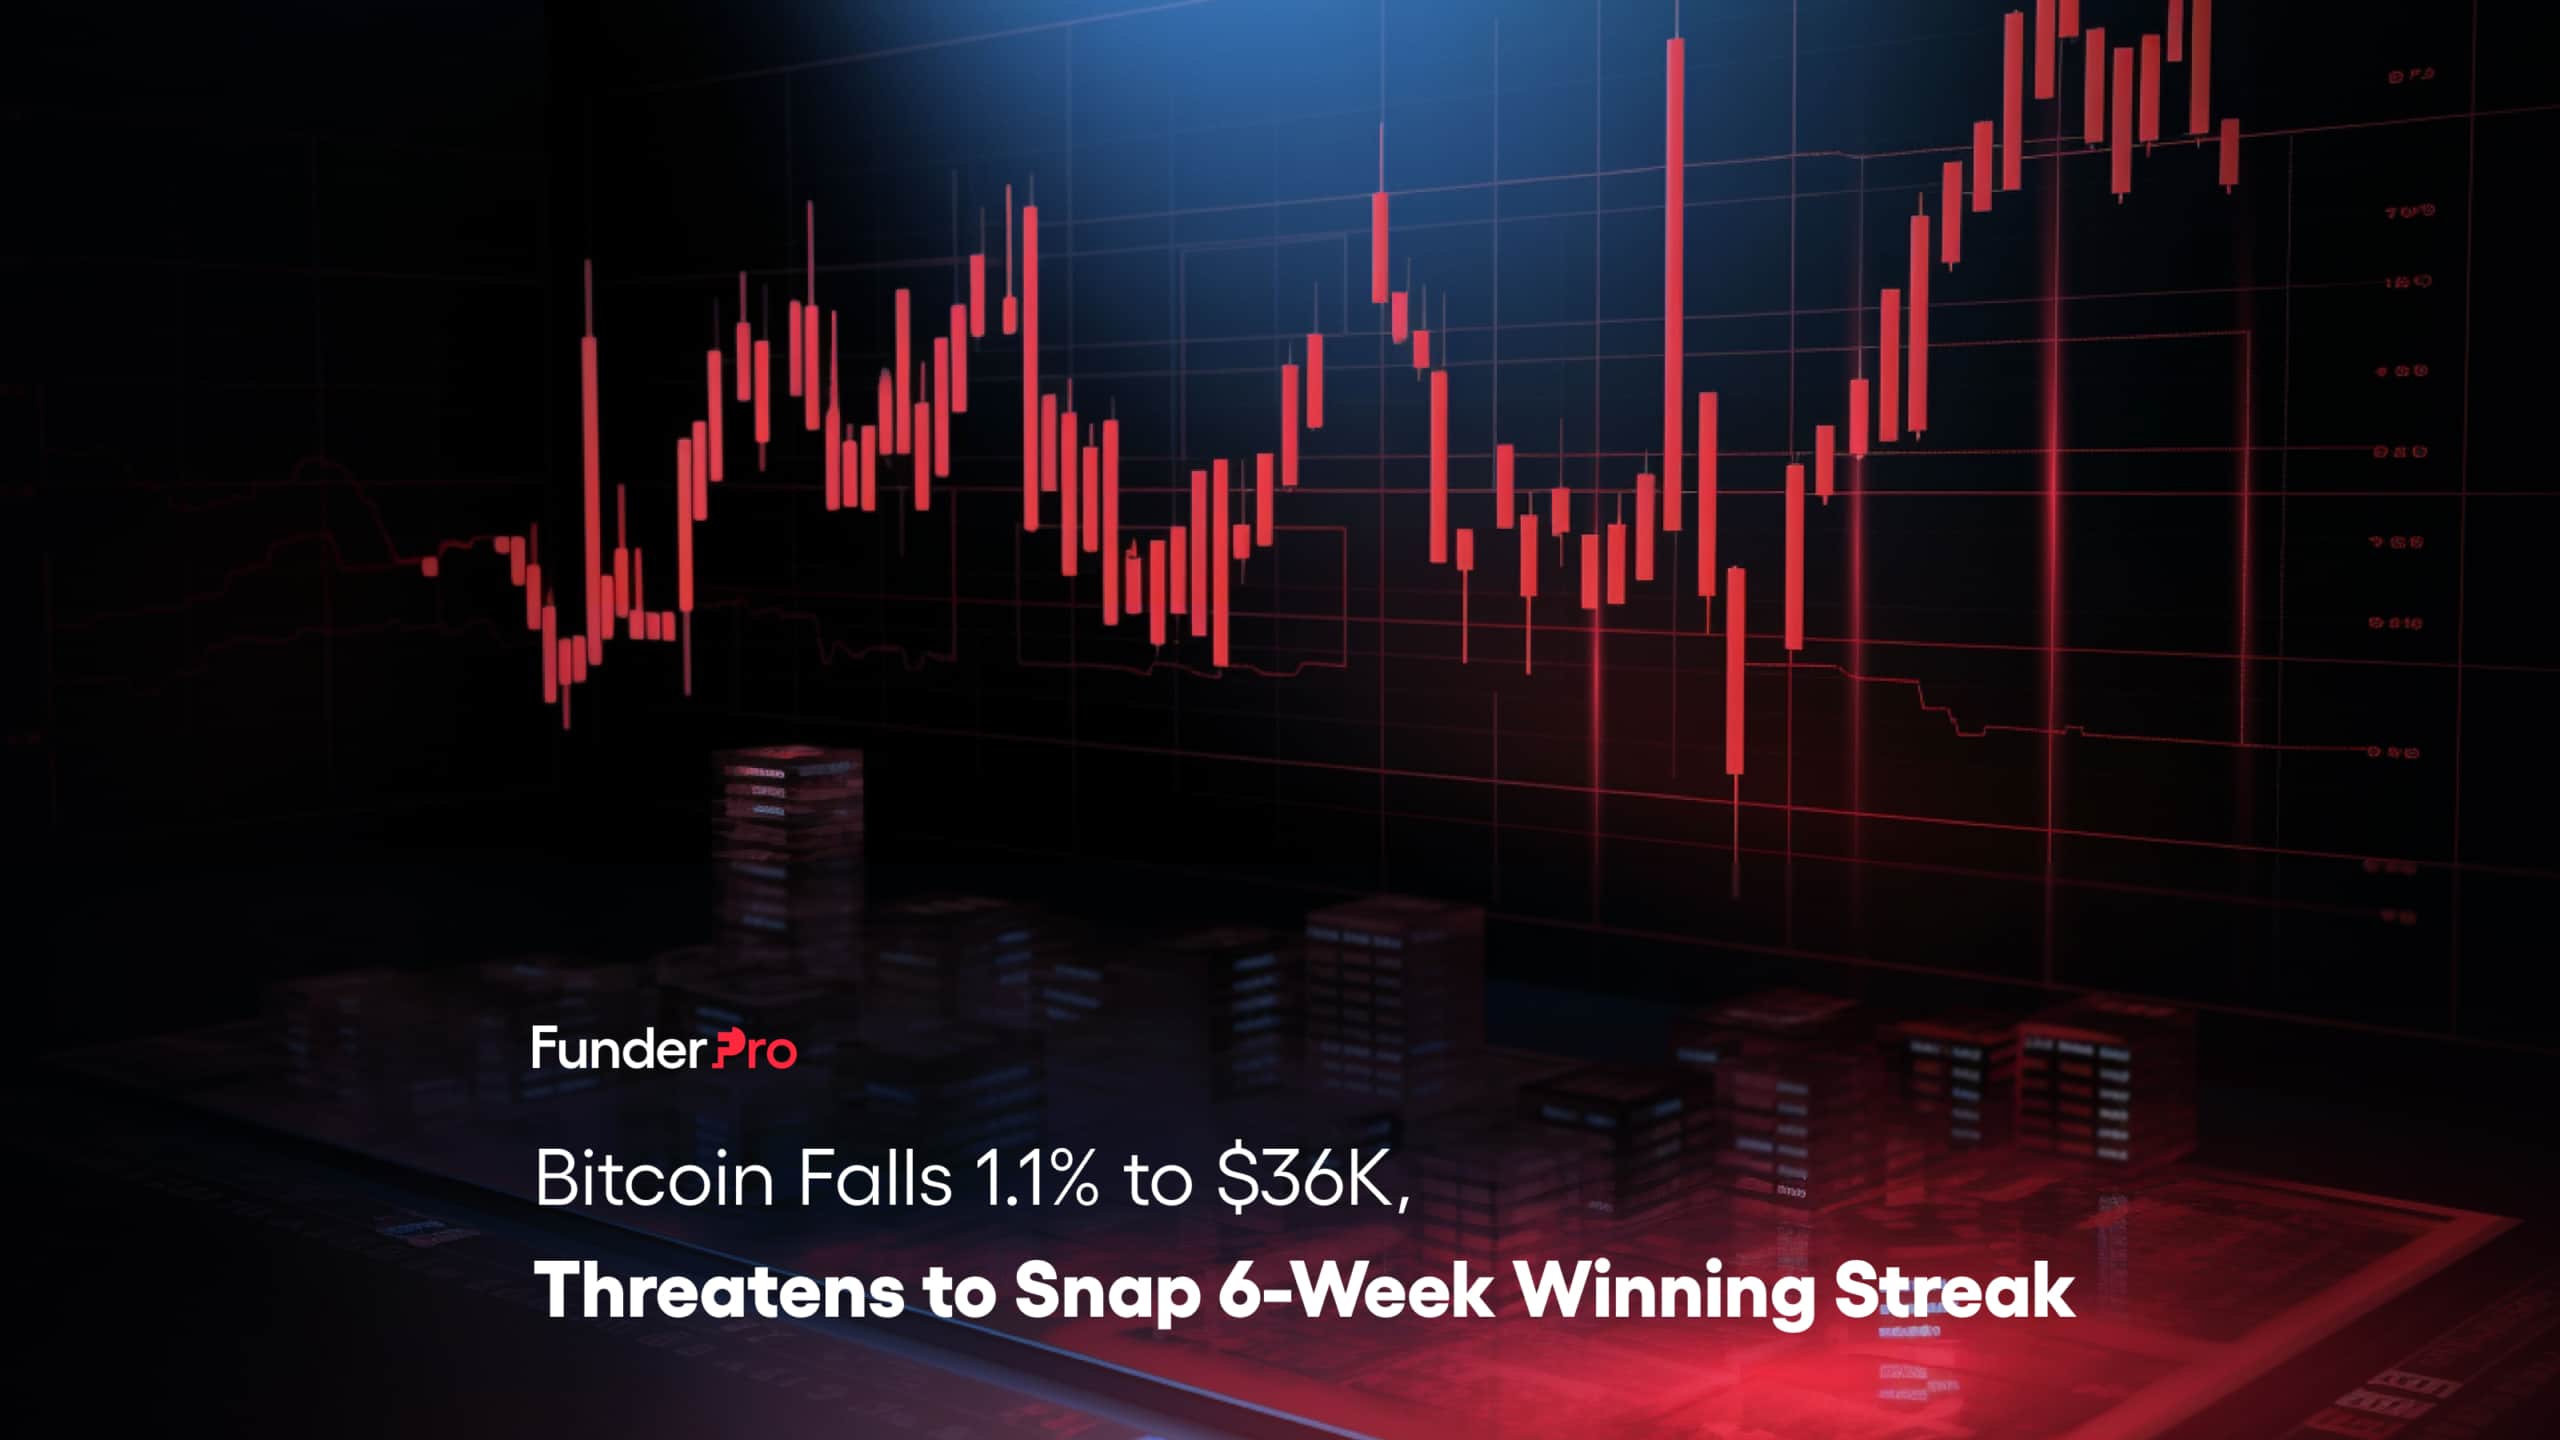 Bitcoin Falls 1.1% to $36K, Threatens to Snap 6-Week Winning Streak